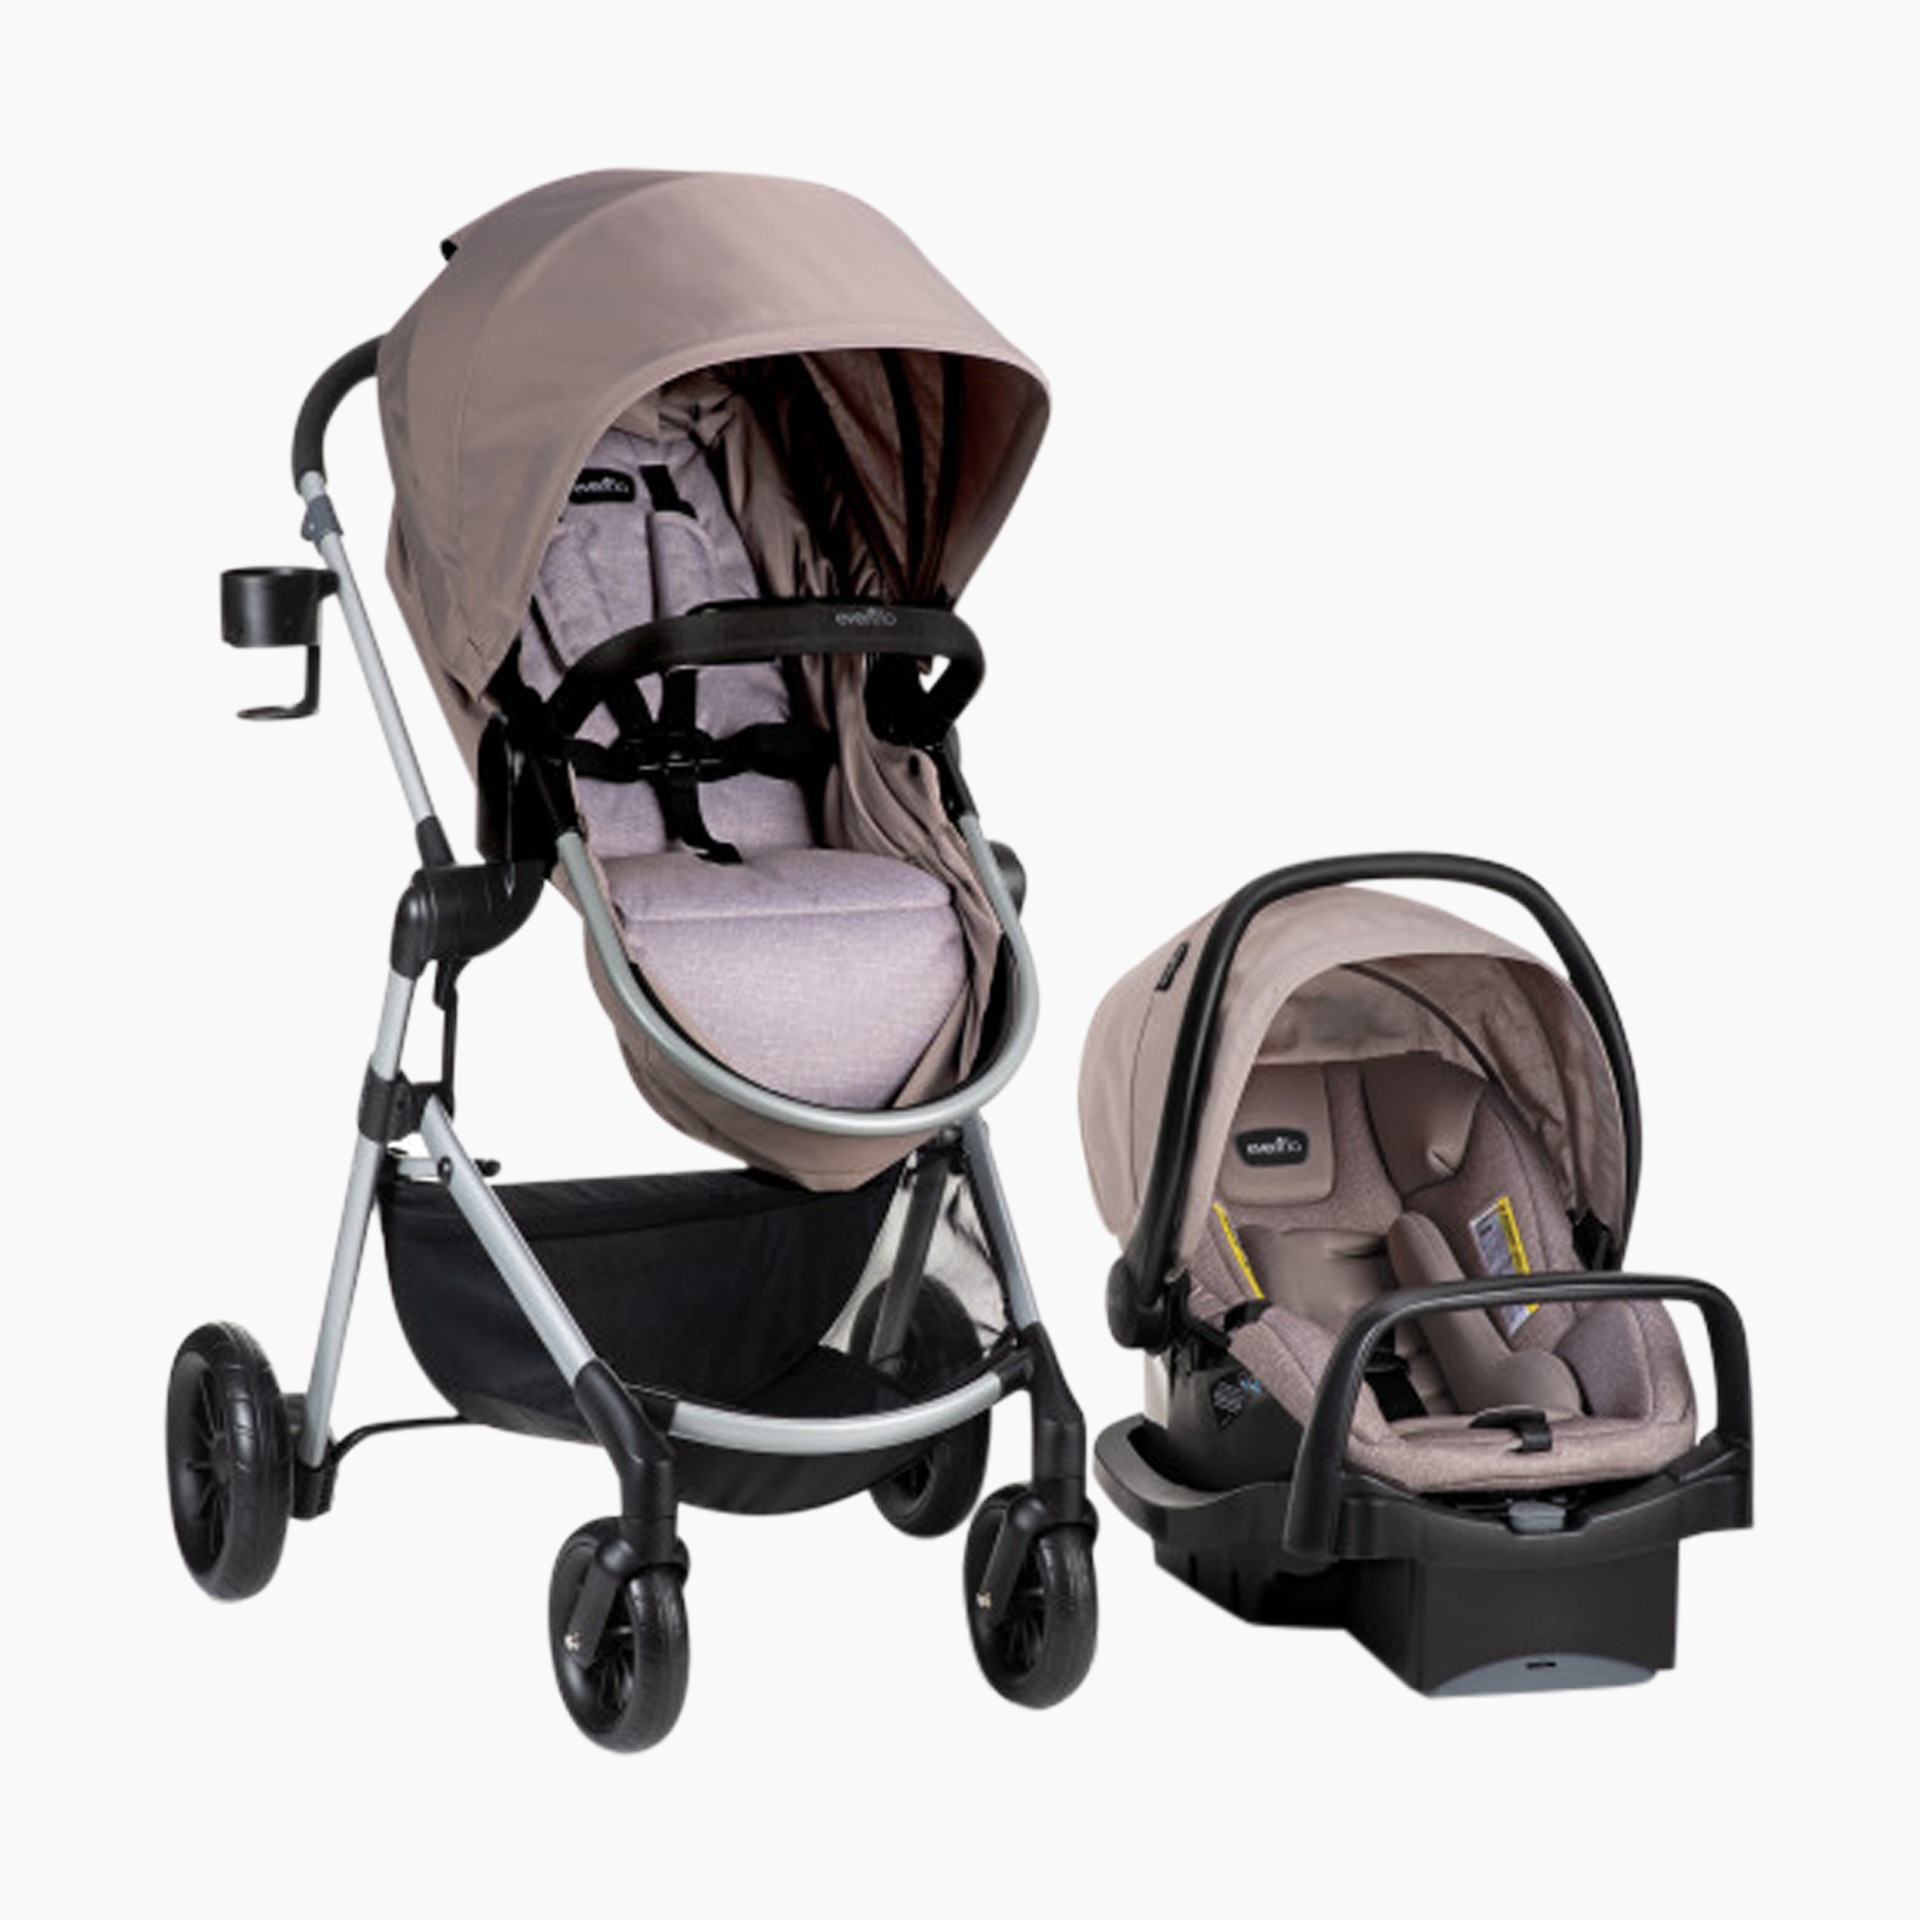 Safemax Infant Car Seat, Evenflo Safemax Infant Car Seat Head Support